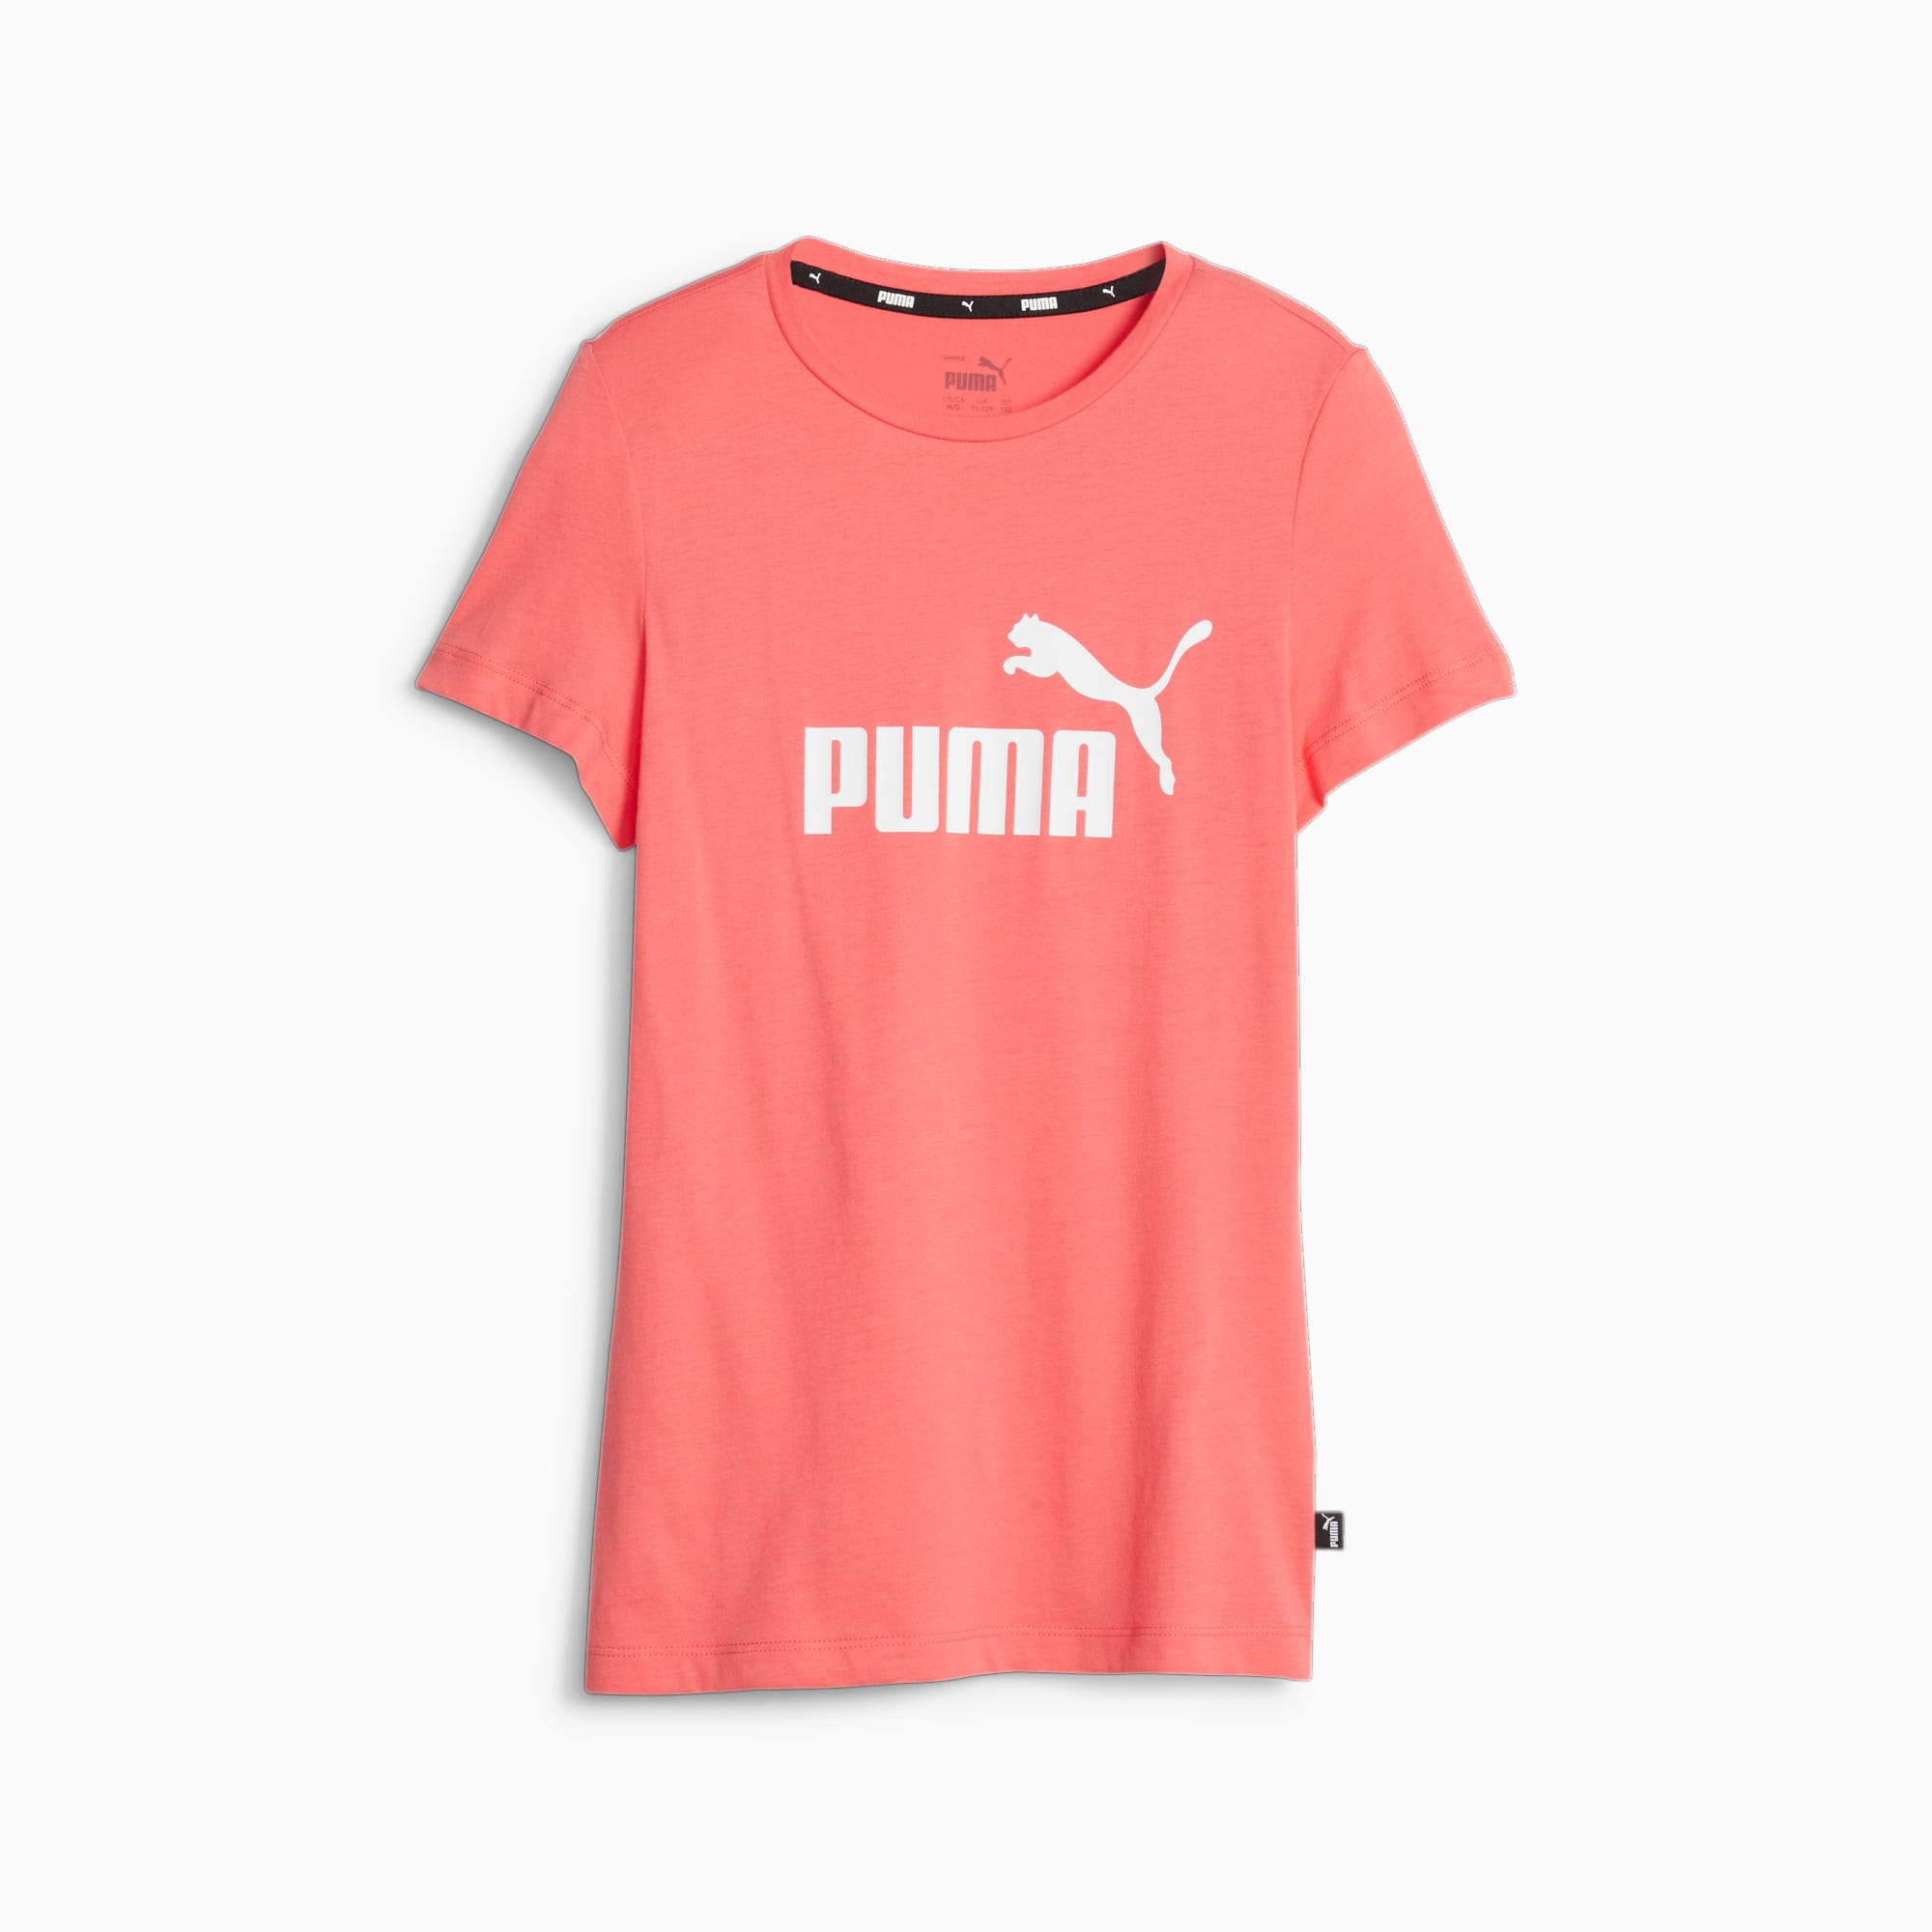 PUMA Essentials Logo Youth T-Shirt, Electric Blush, Size 98, Clothing